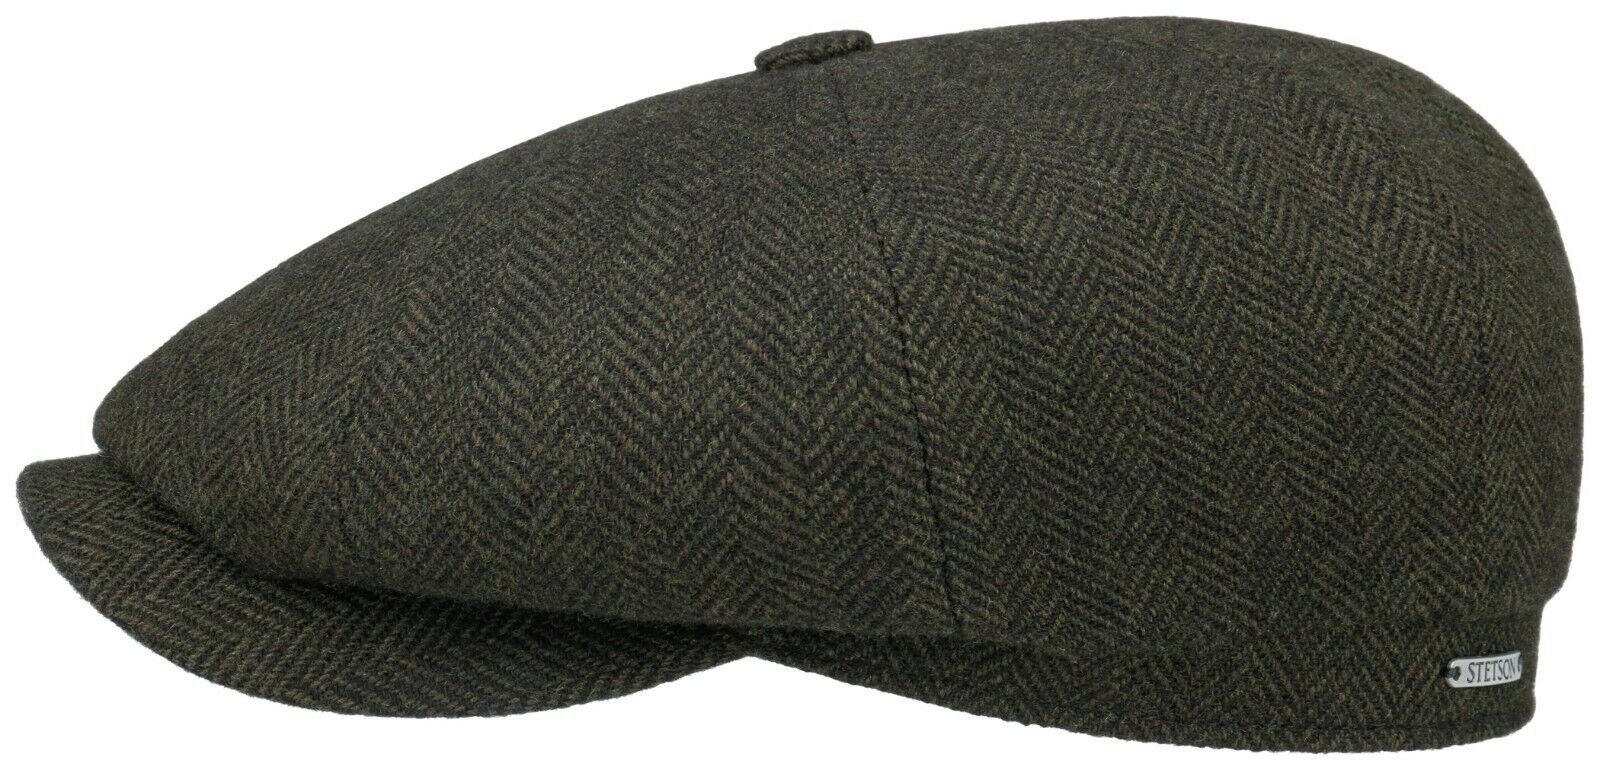 Hatteras Ballonmütze Grün Stetson Wool aus Wolle Classic